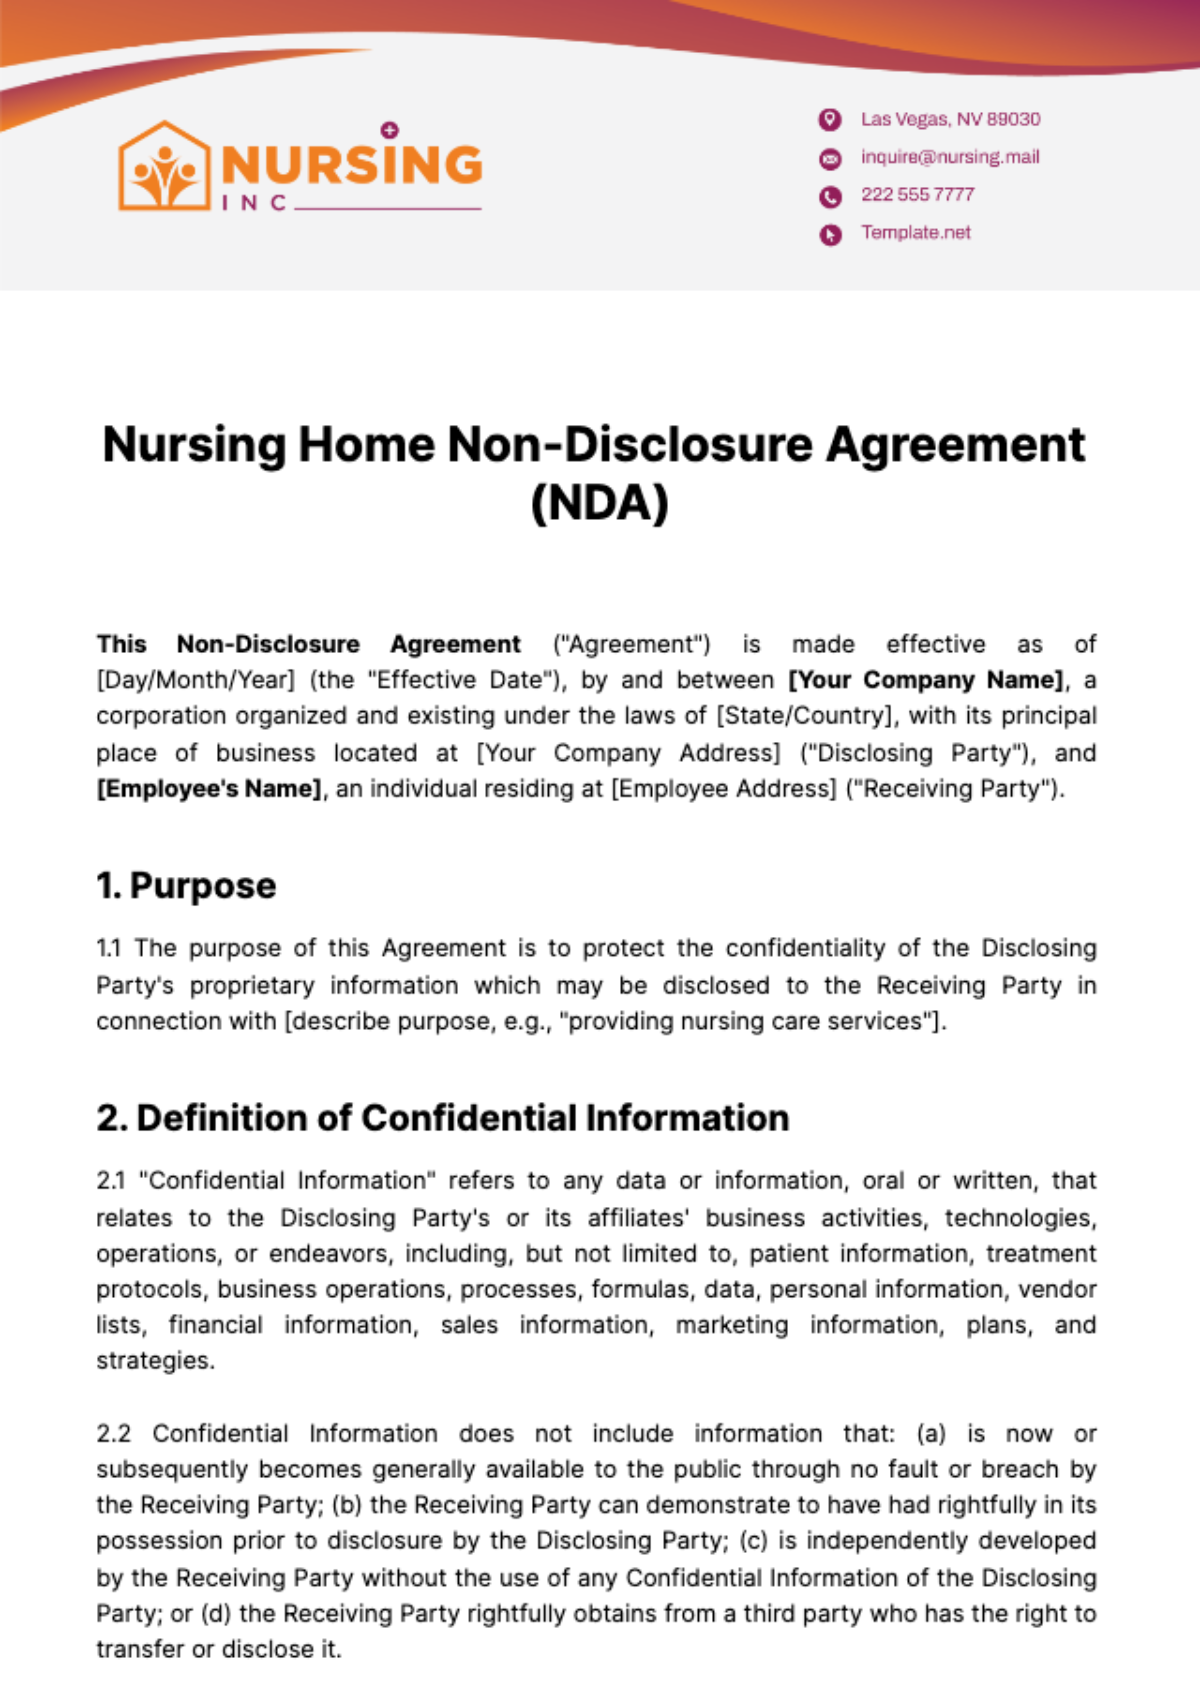 Nursing Home Non-Disclosure Agreement (NDA) Template